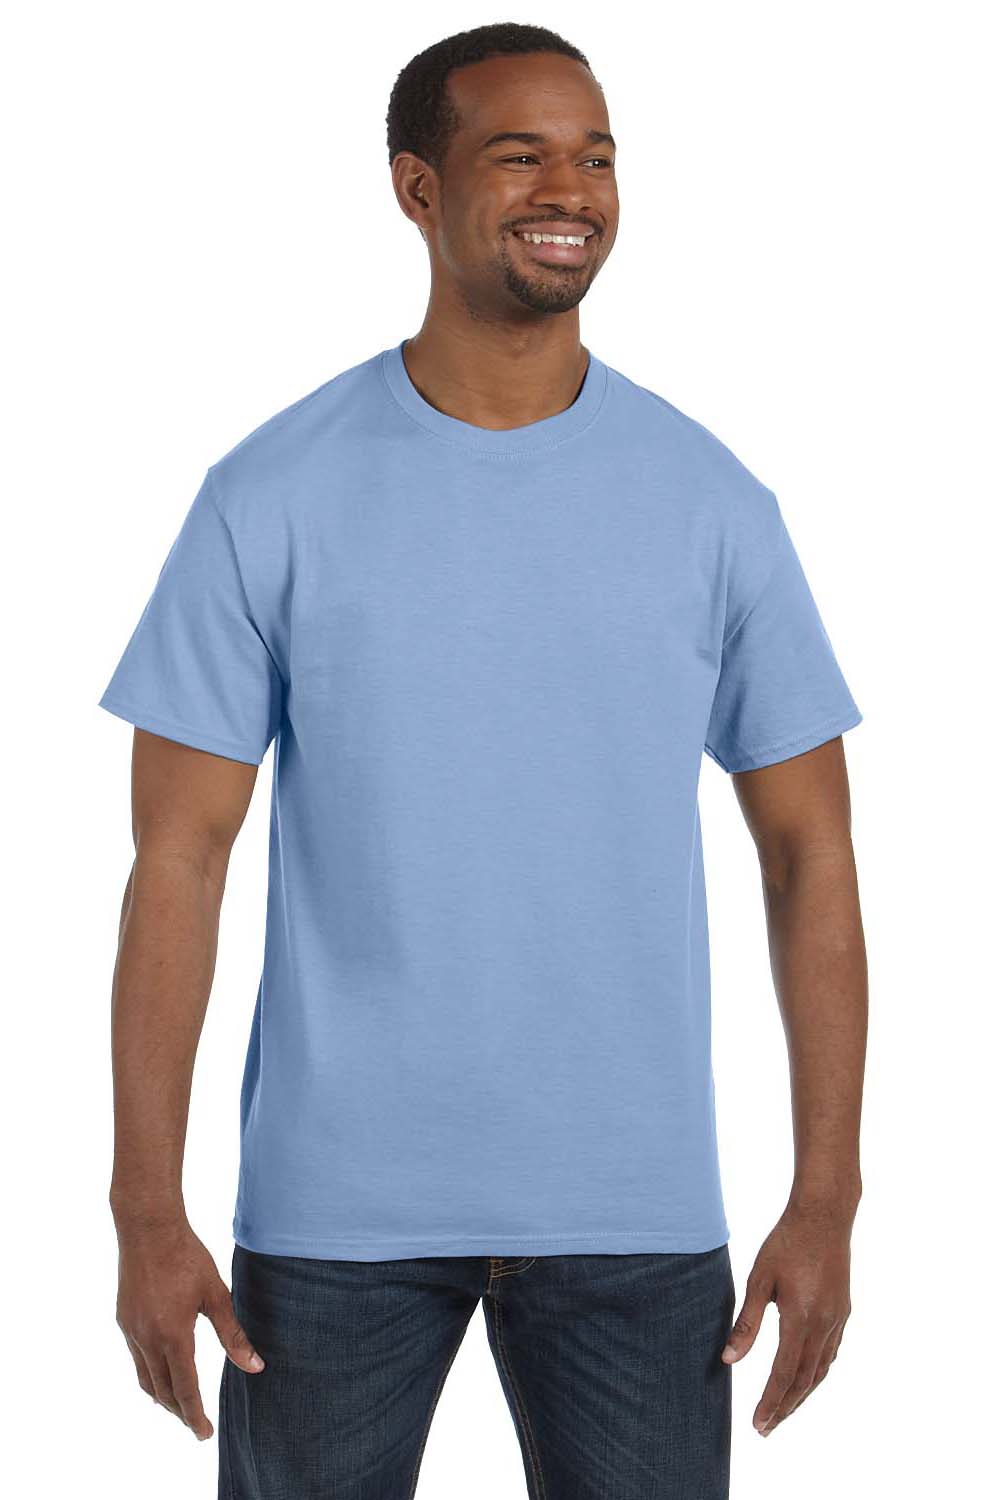 Hanes 5250T Mens ComfortSoft Short Sleeve Crewneck T-Shirt Light Blue Front